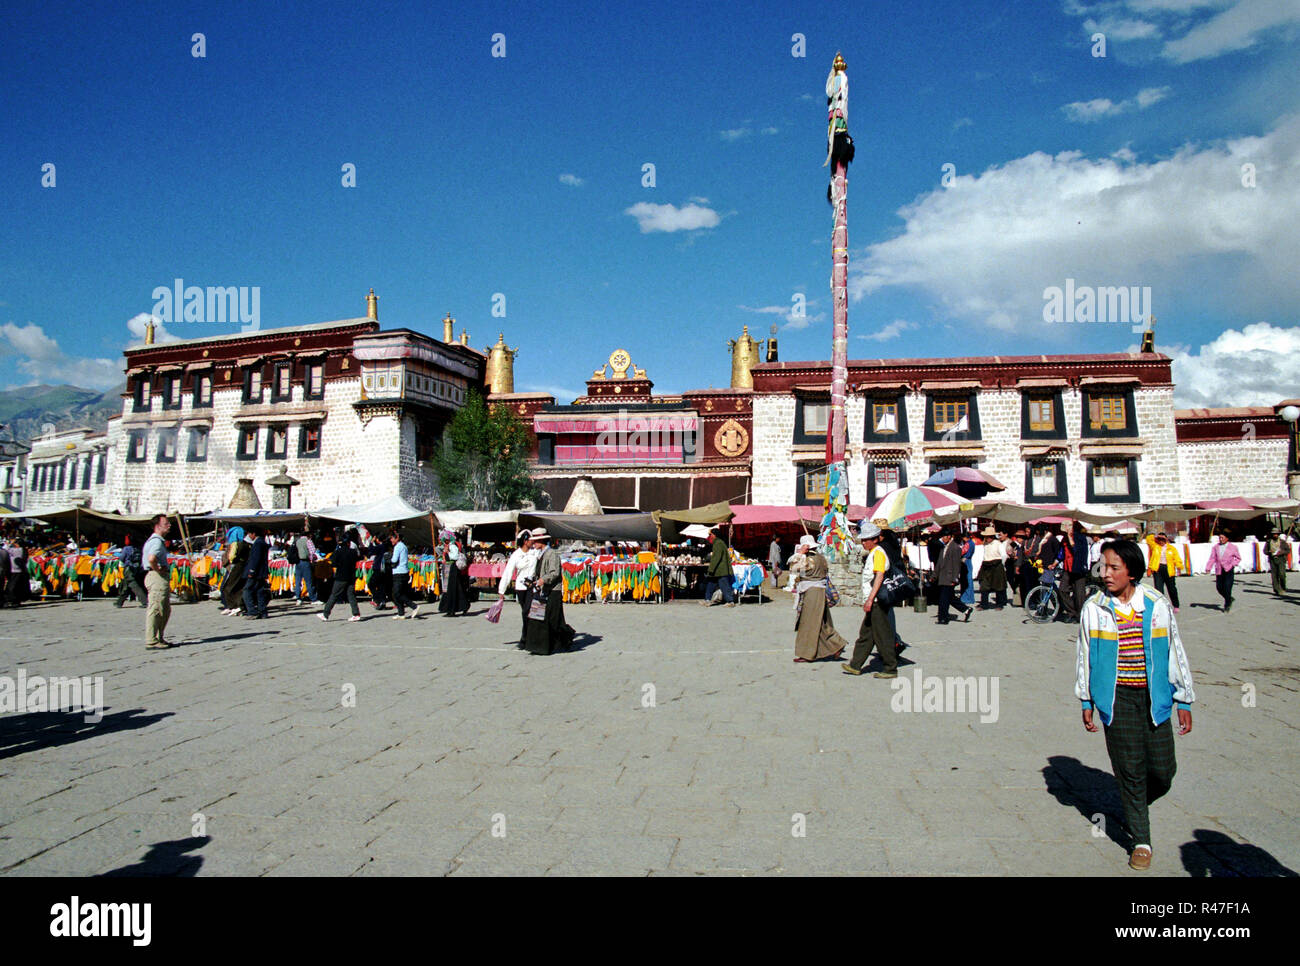 Il Tibet, Lhasa: Menschen auf dem Platz vor dem Jokhang Tempel. - 15.05.1998 Foto Stock